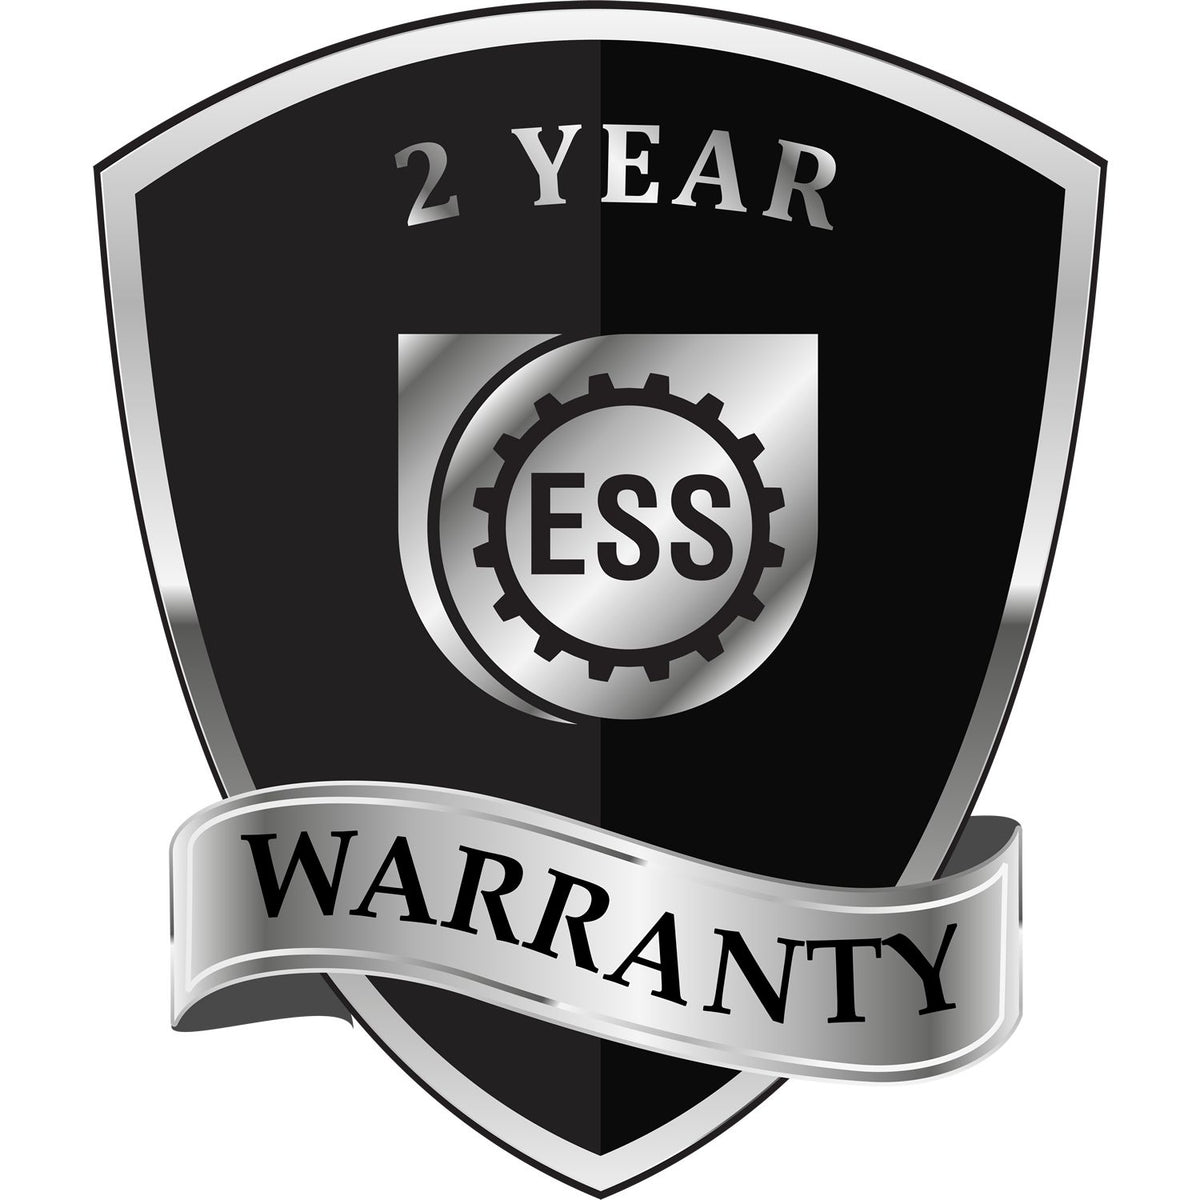 A black and silver badge or emblem showing warranty information for the Hybrid Utah Landscape Architect Seal